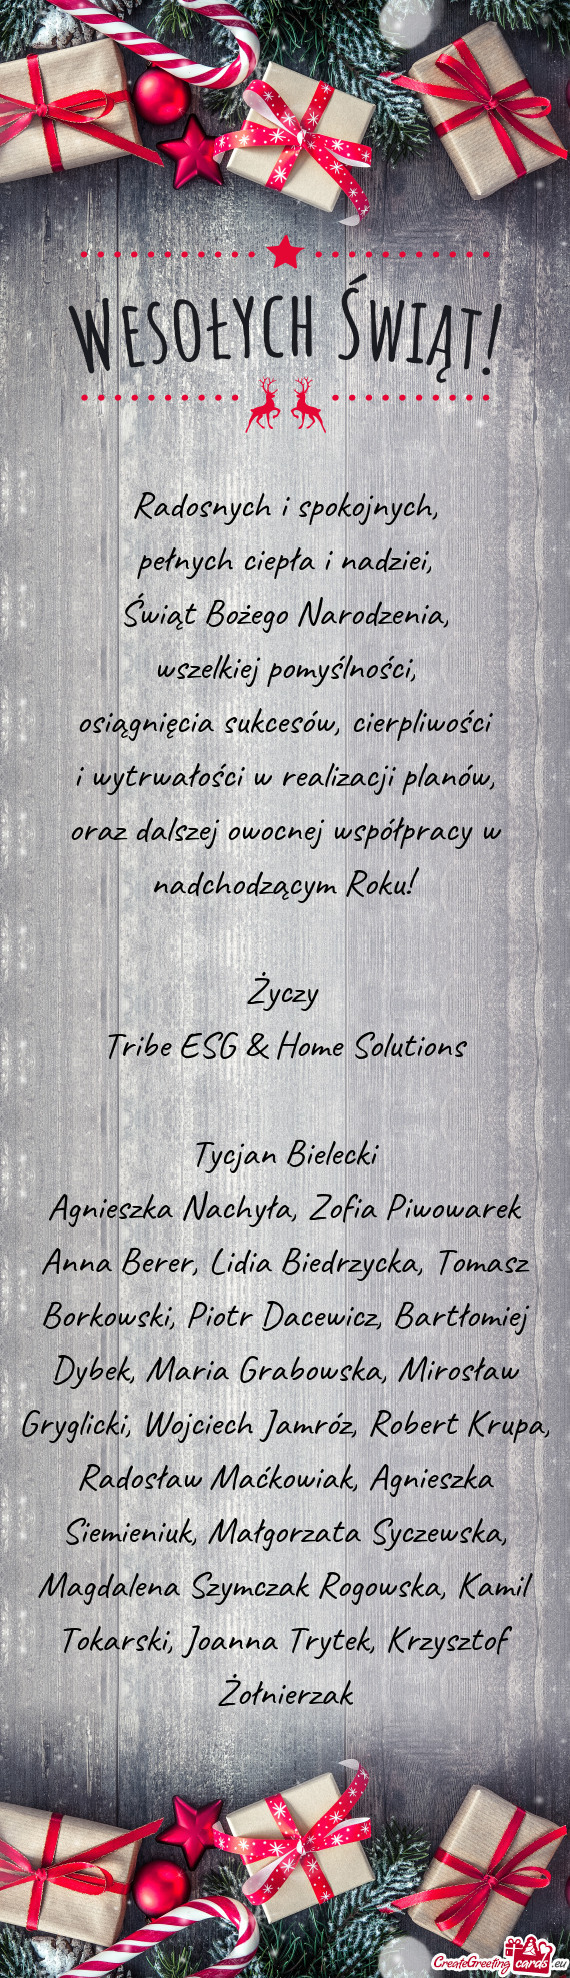 Tribe ESG & Home Solutions